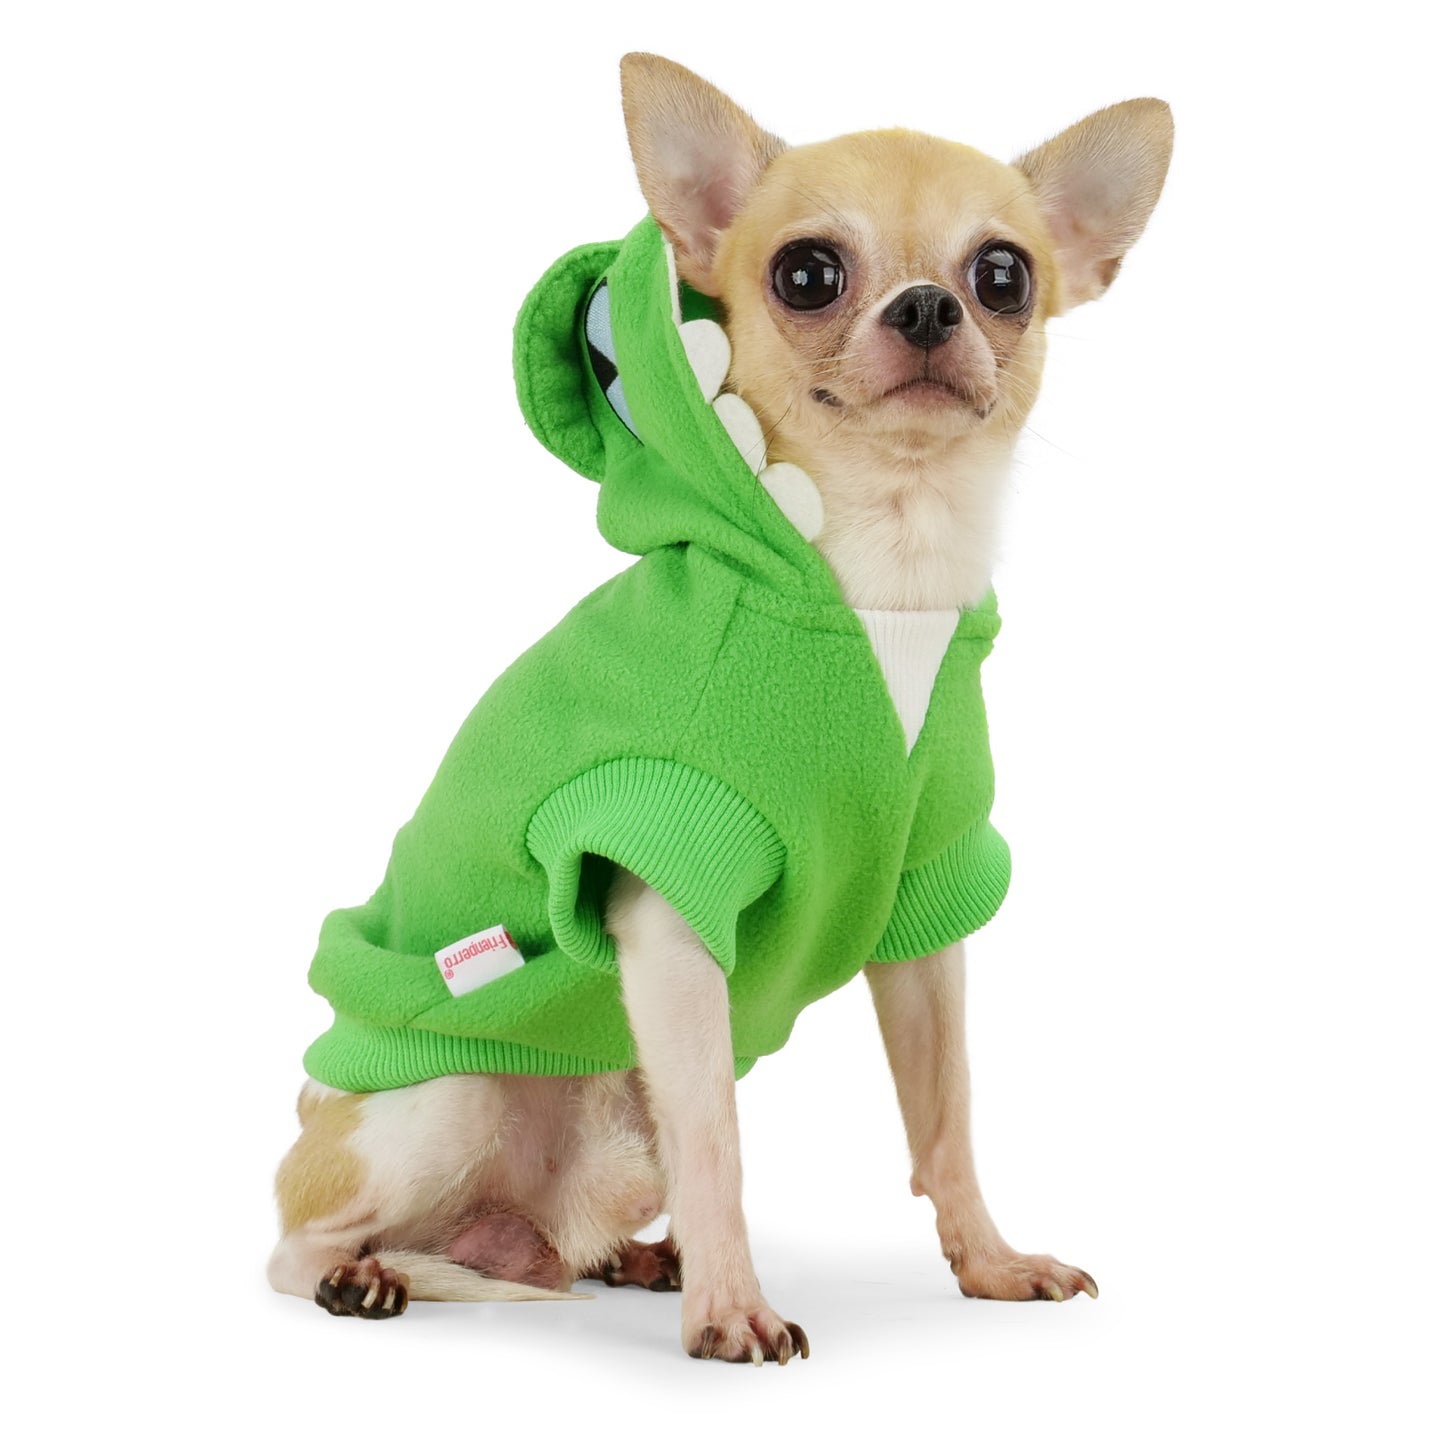 Frienperro Dinosaur Dog Costume